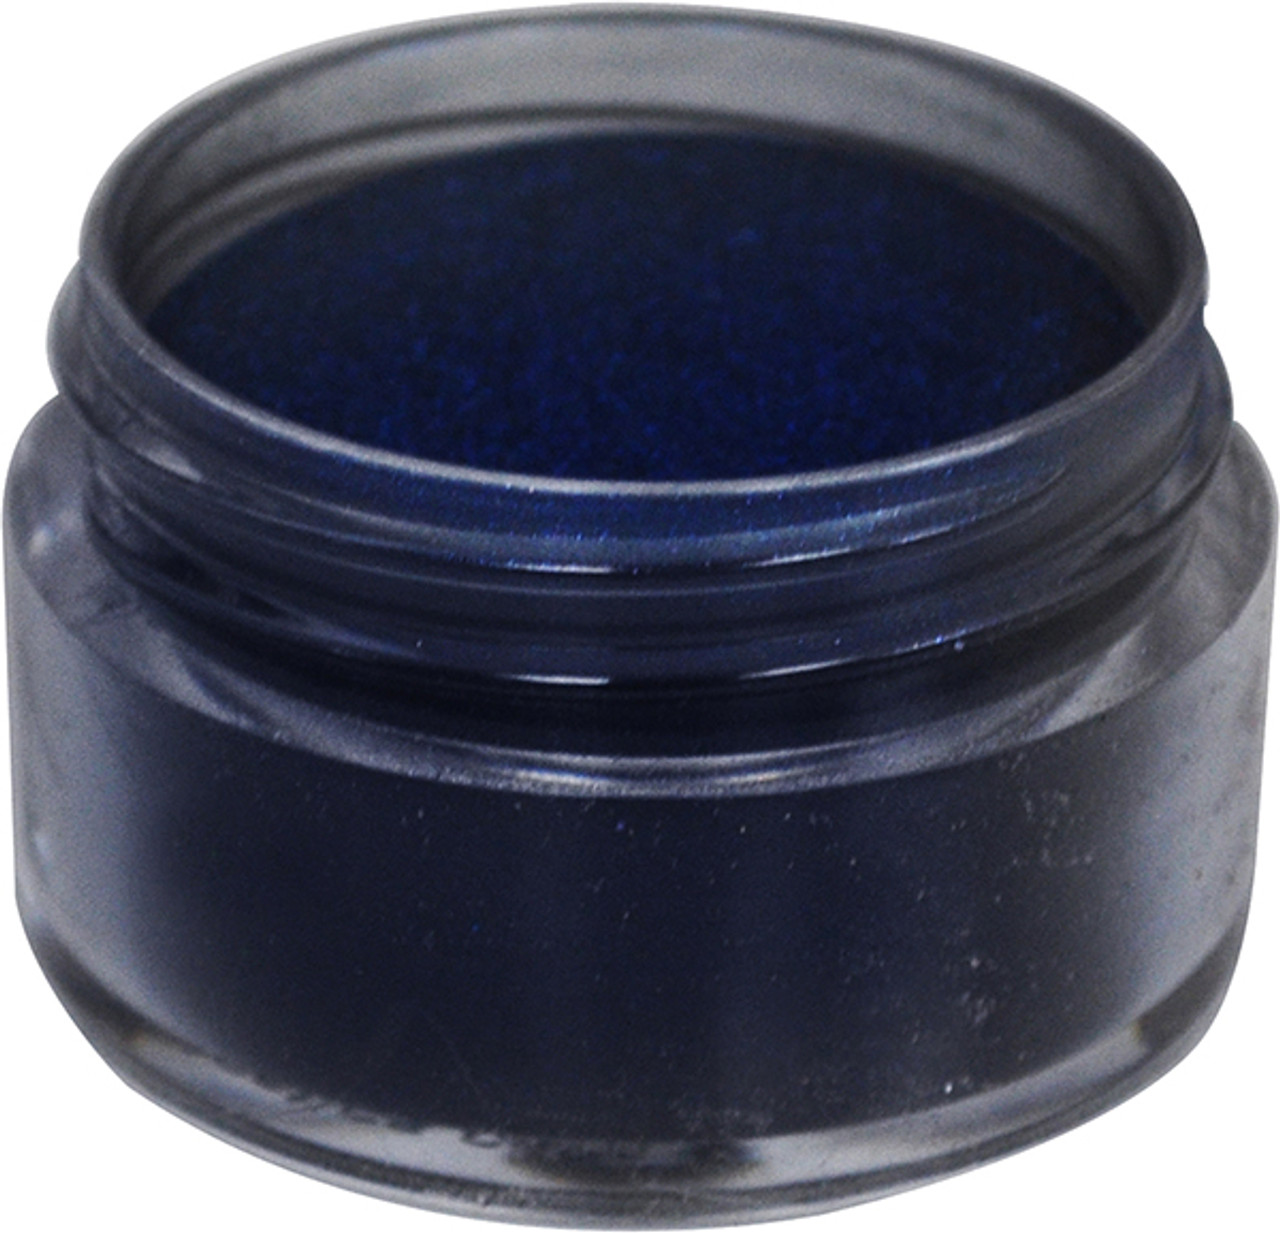 U2 Hollywood Gems Color Powders - Pin Pin Blue -  1 lb